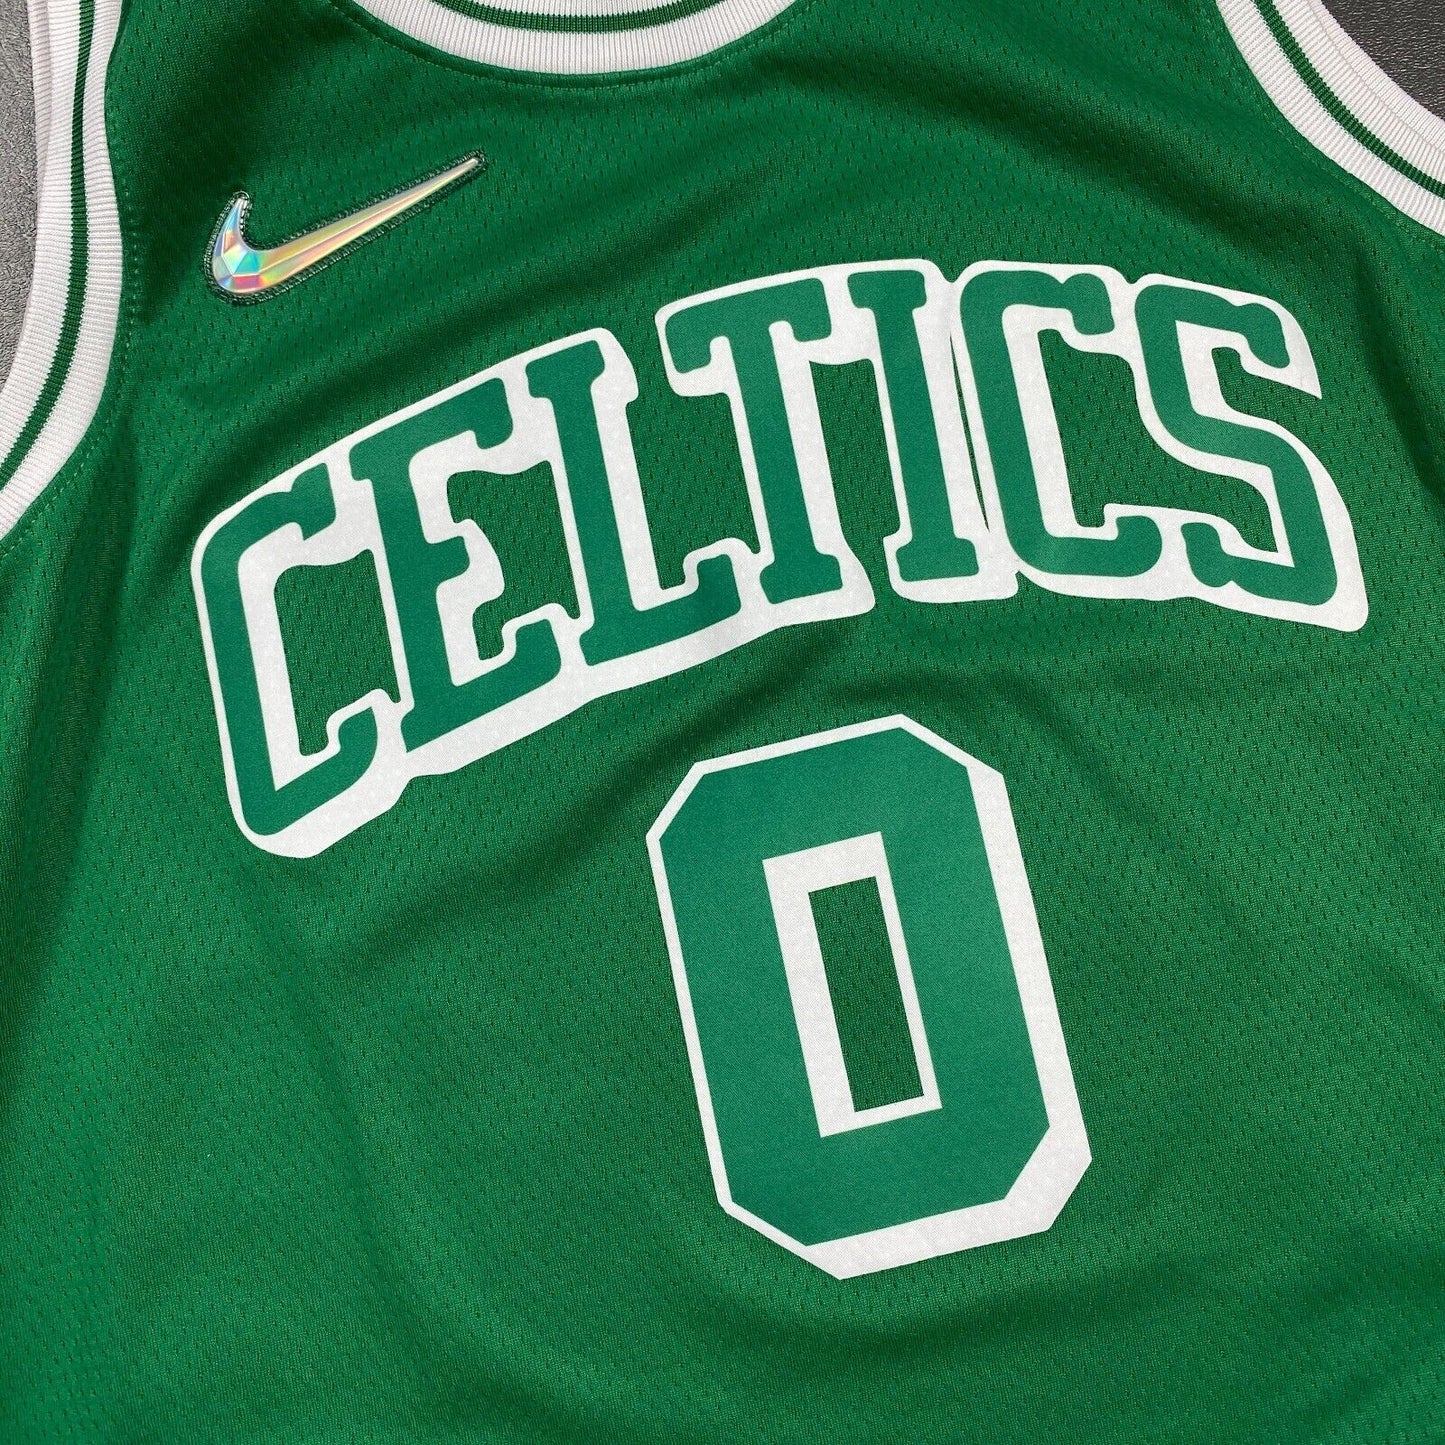 100% Authentic Jason Tatum Nike City Edition Celtics Swingman Jersey Size 48 L